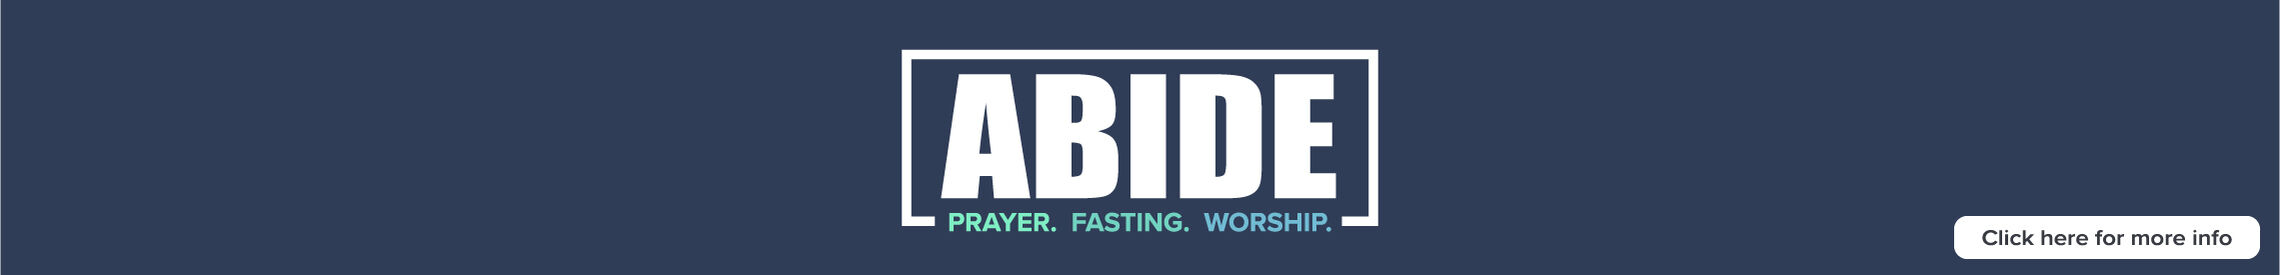 Abide2021 Web Banner 2280x276